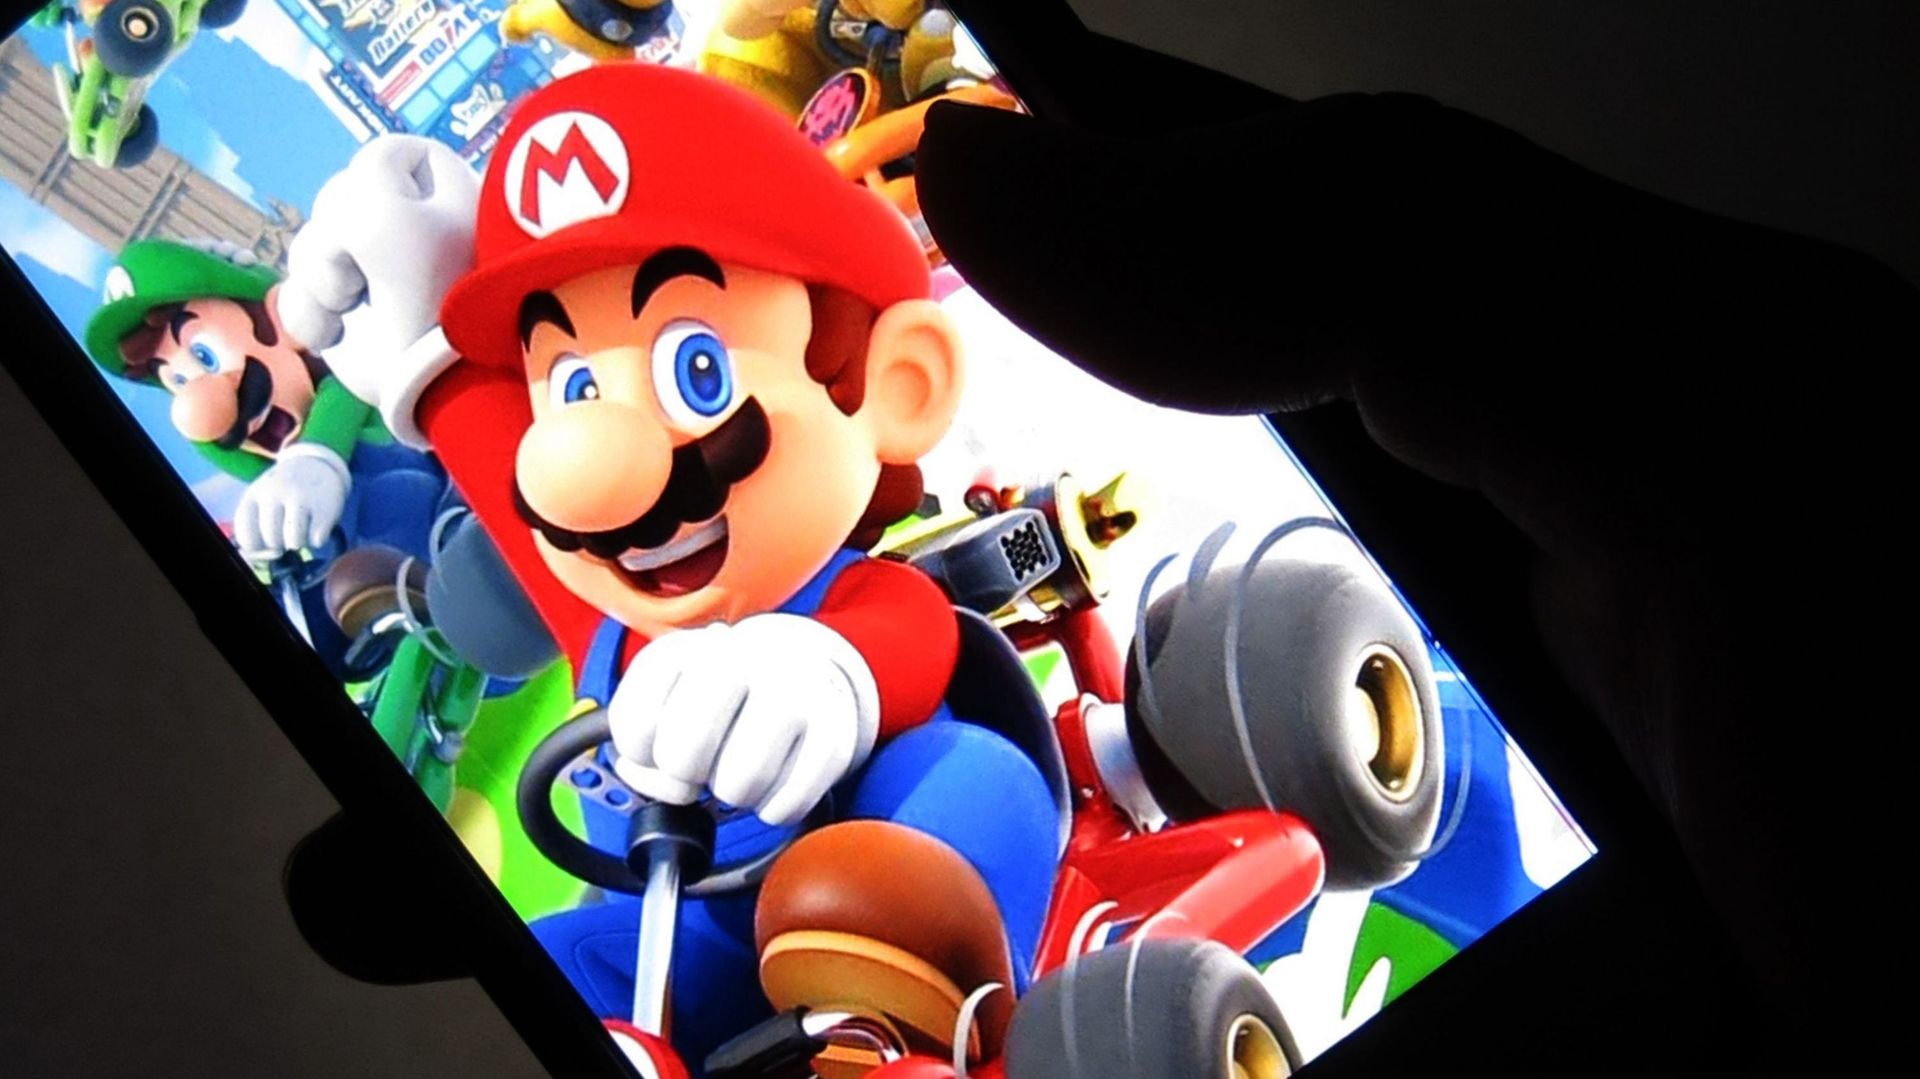 Le jeu Mario Kart a 30 ans